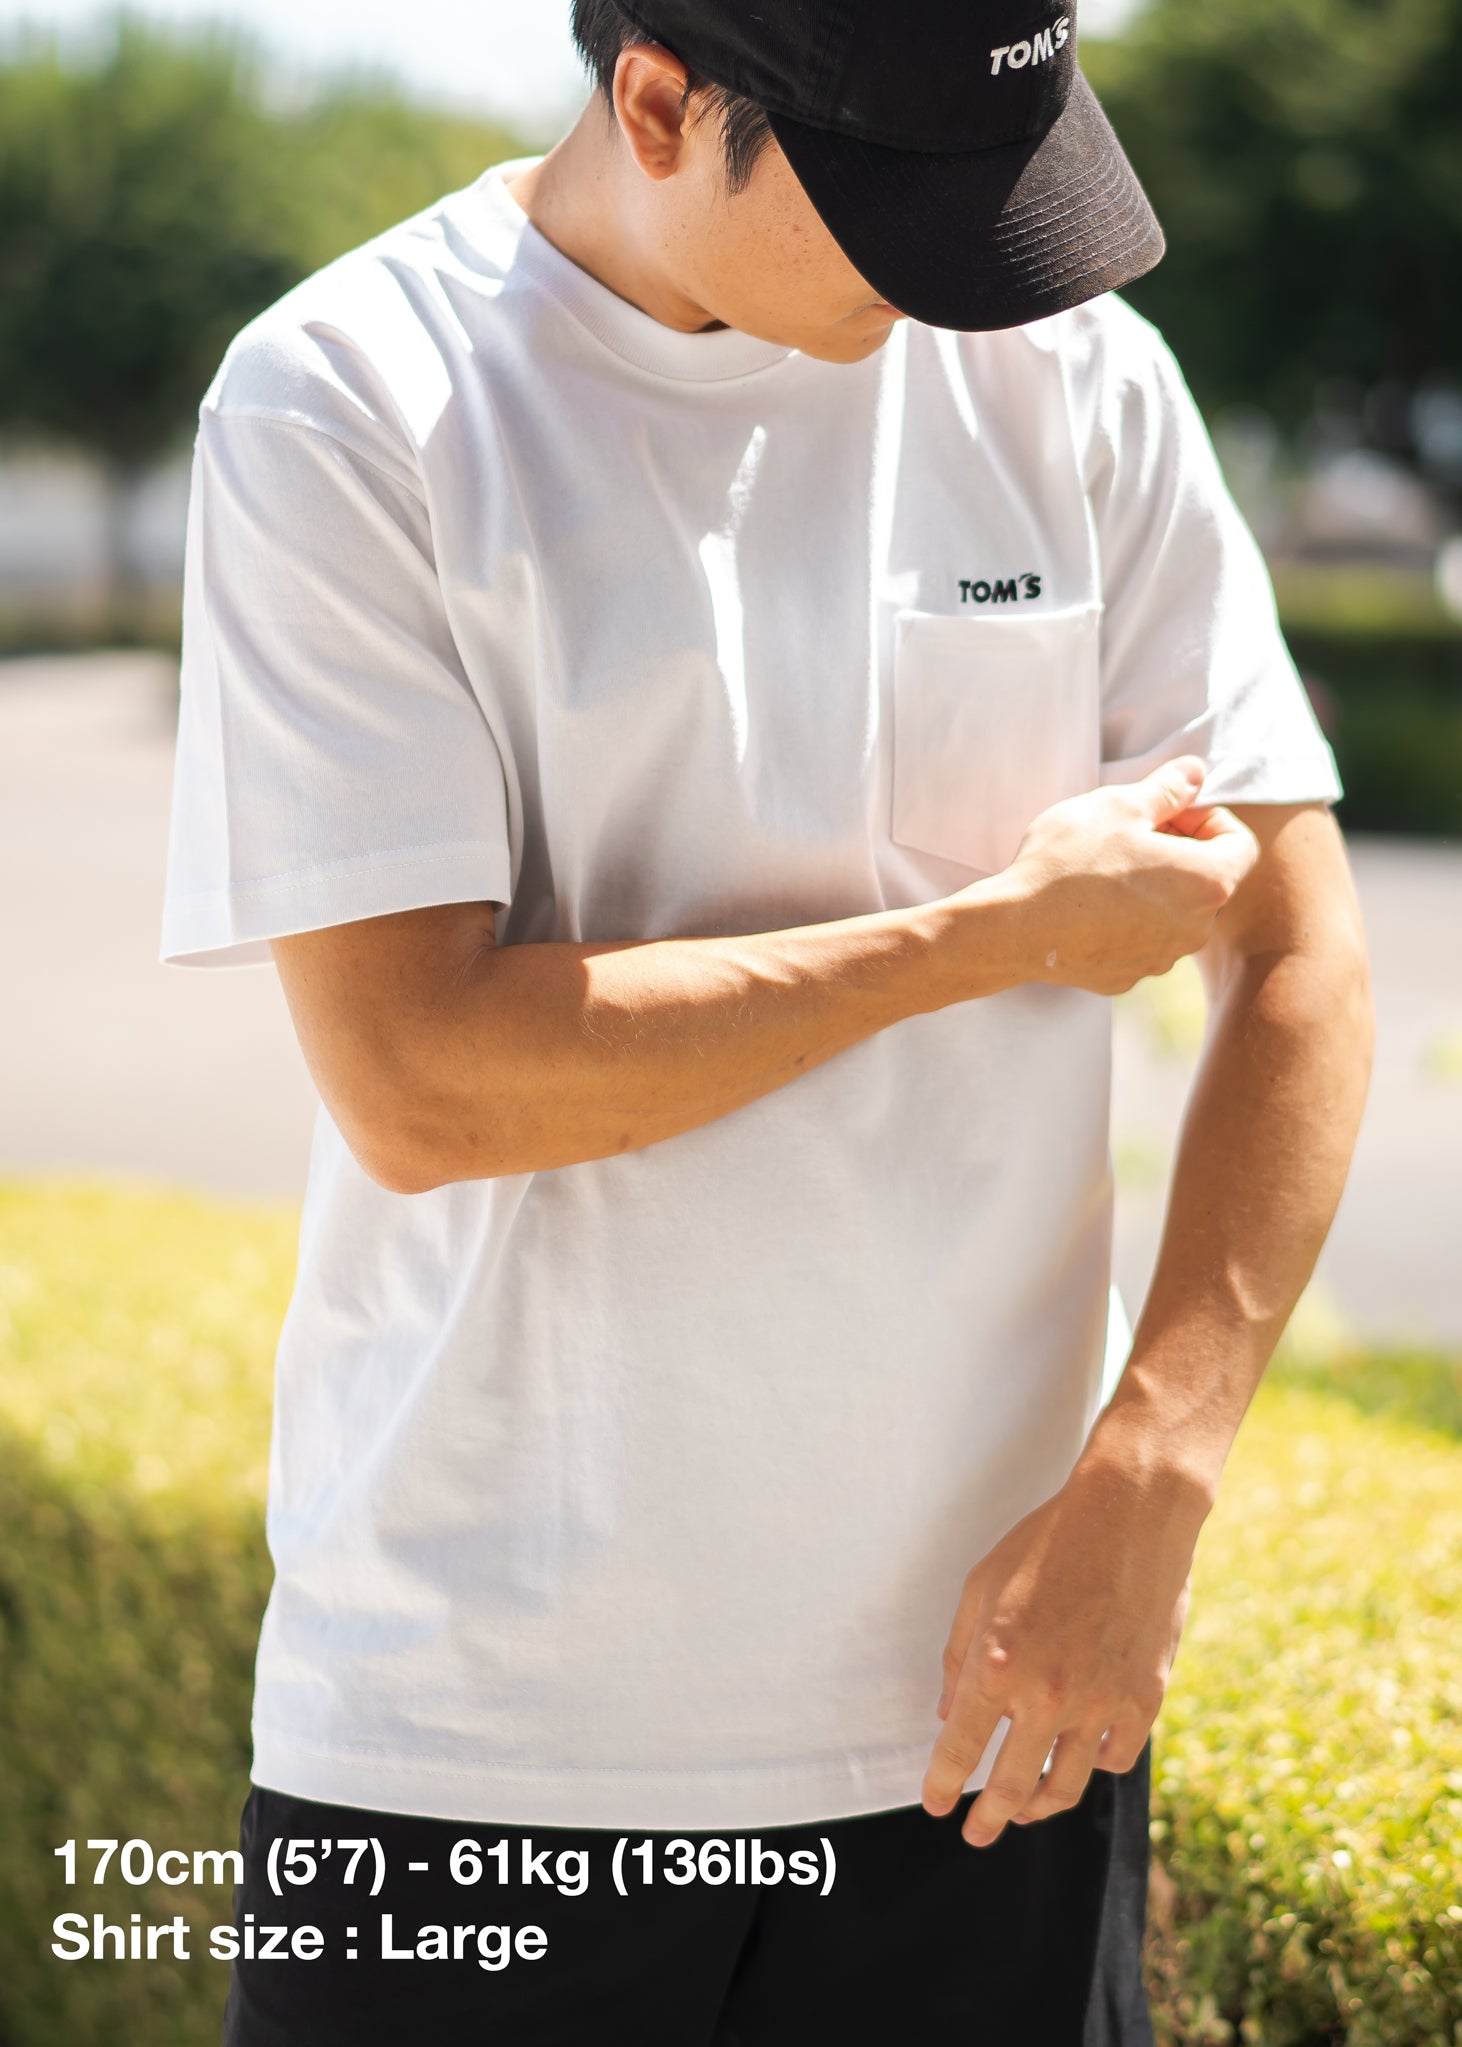 TOM'S Racing - Pocket T-Shirt (White or Black Tee)